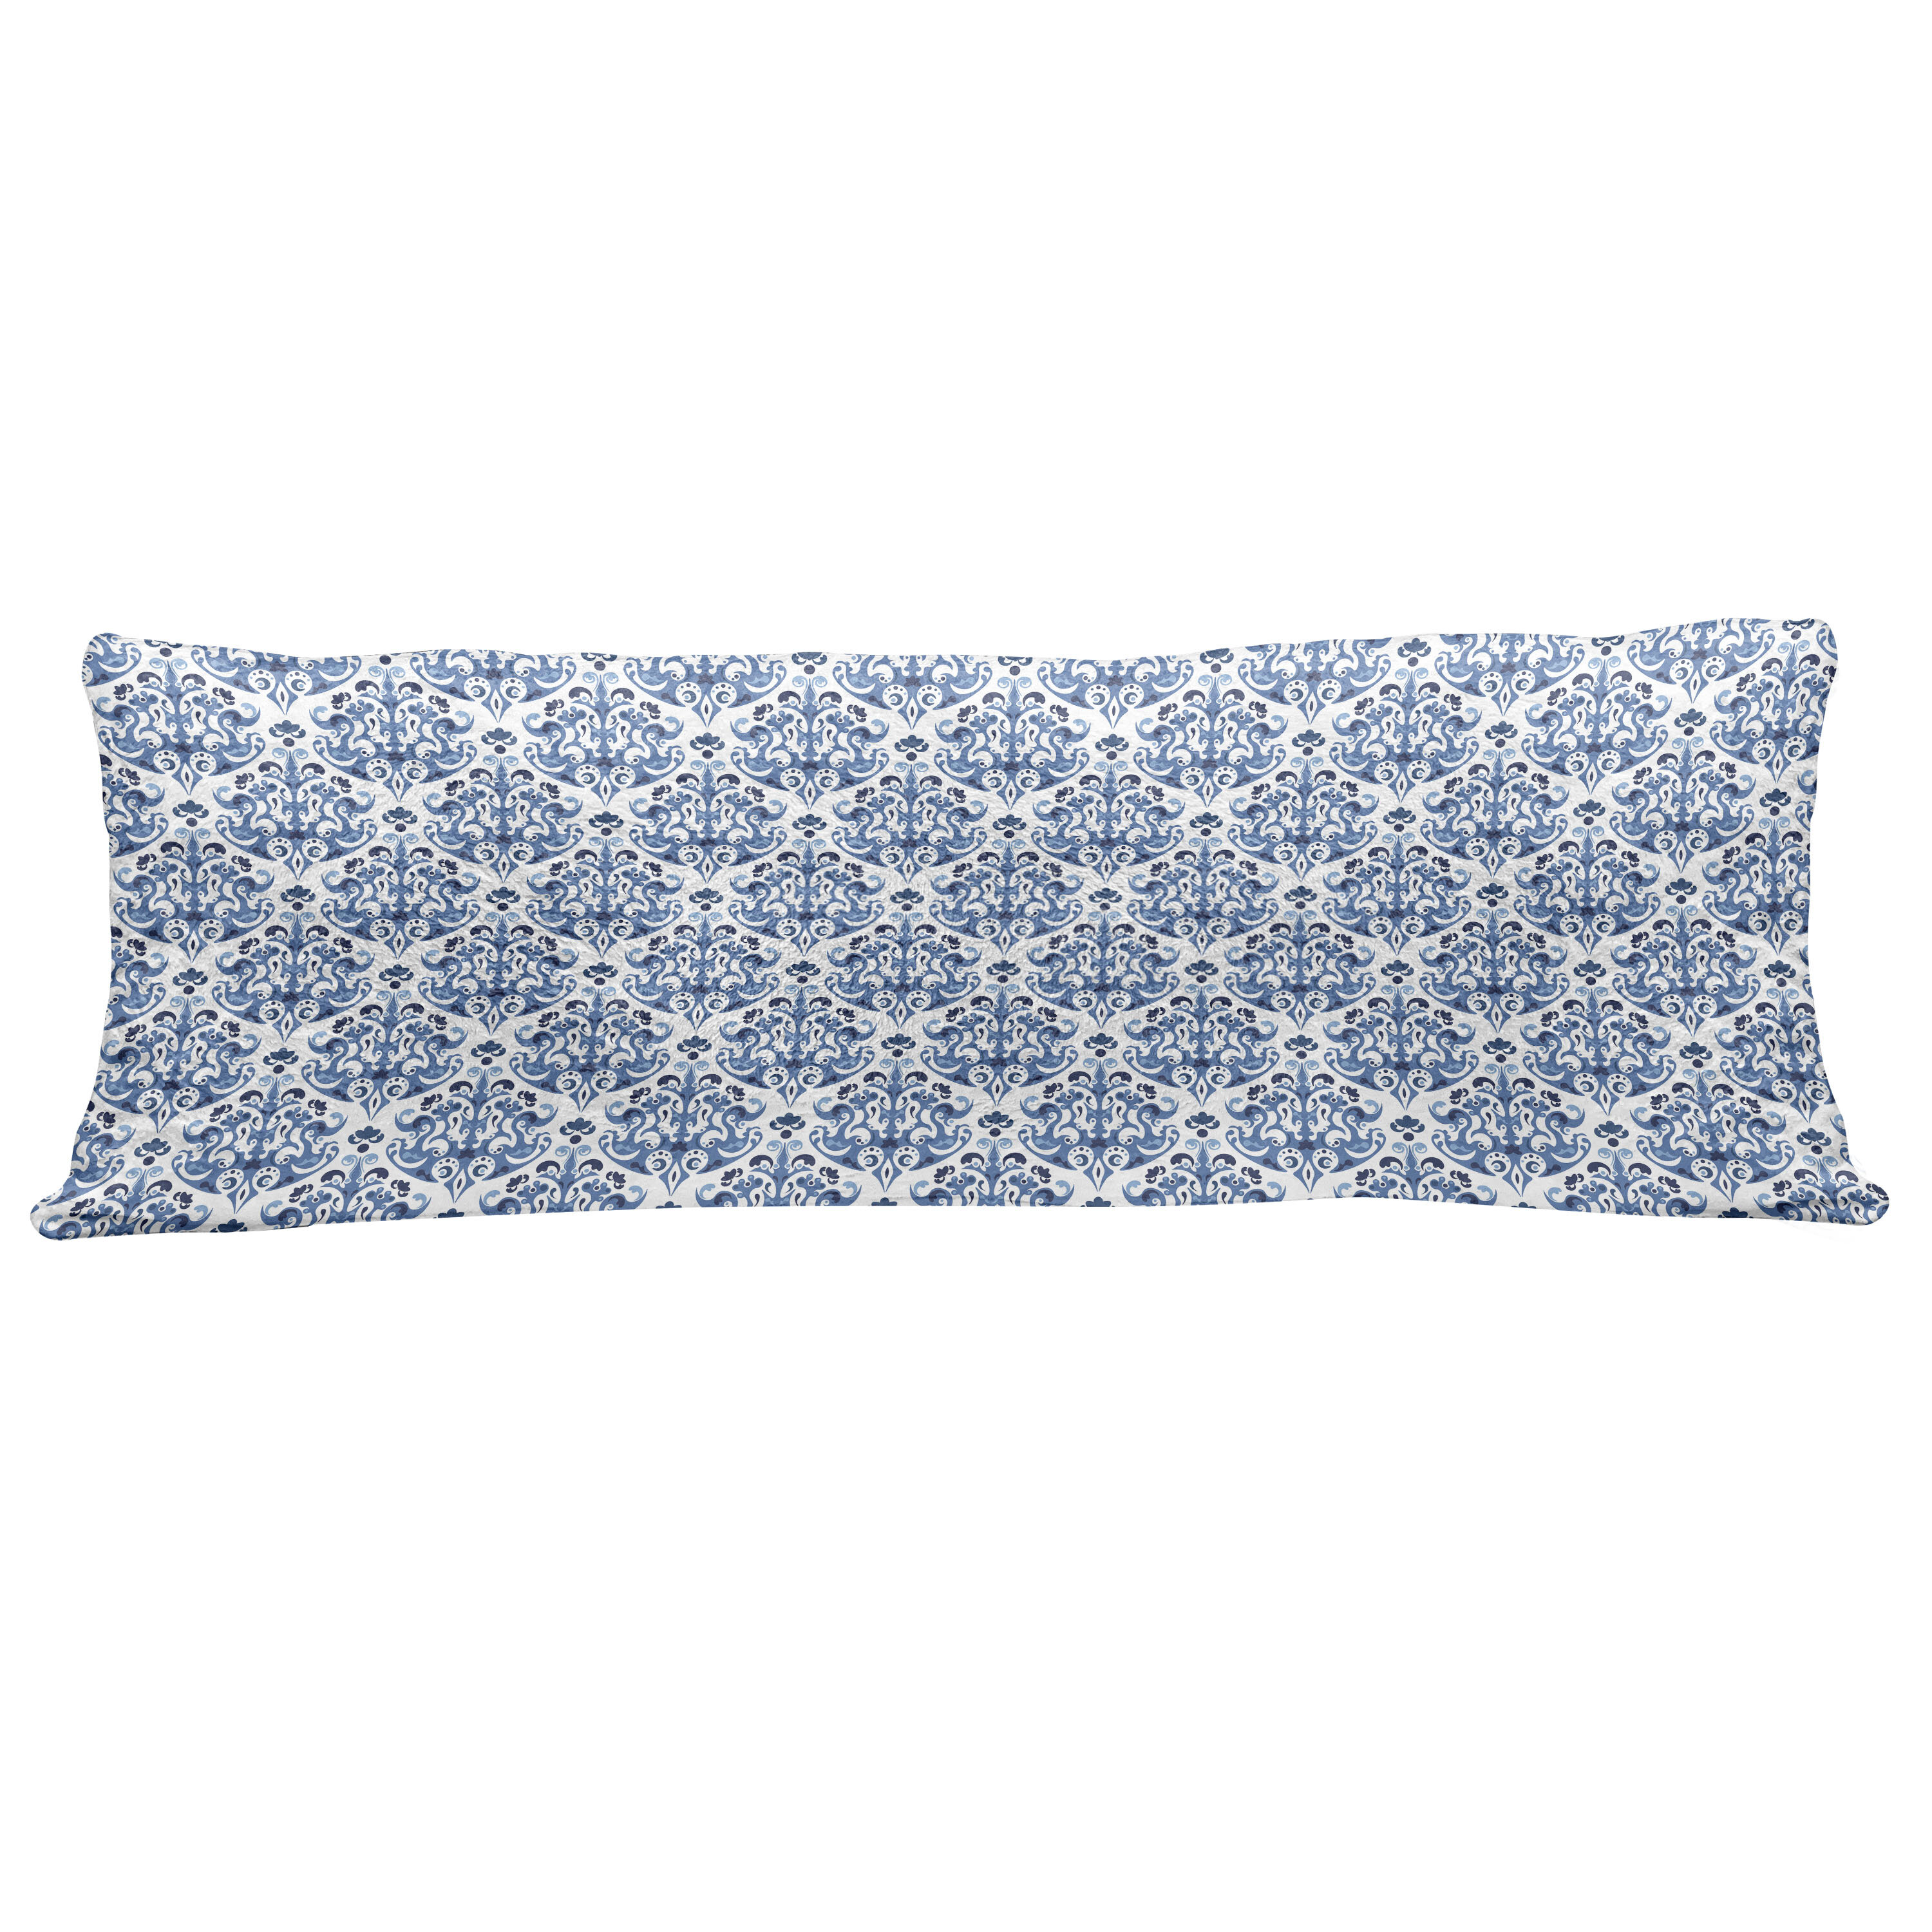 Indigo Washable Microsuede Pillows